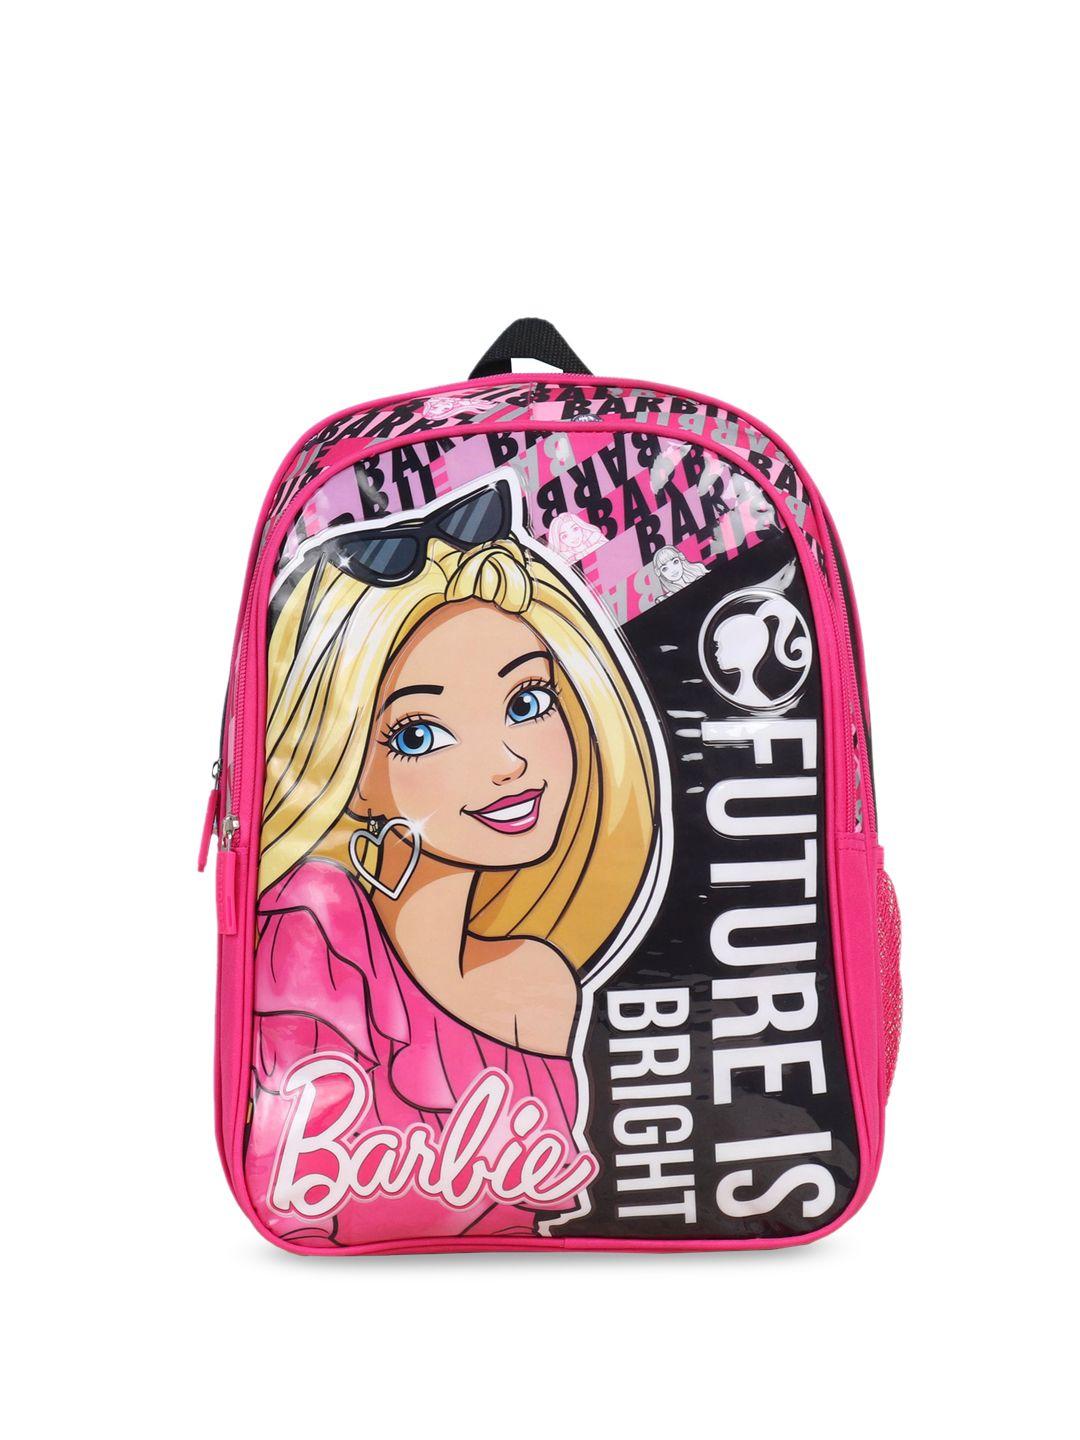 barbie kids future is bright printed water repellent backpack bag